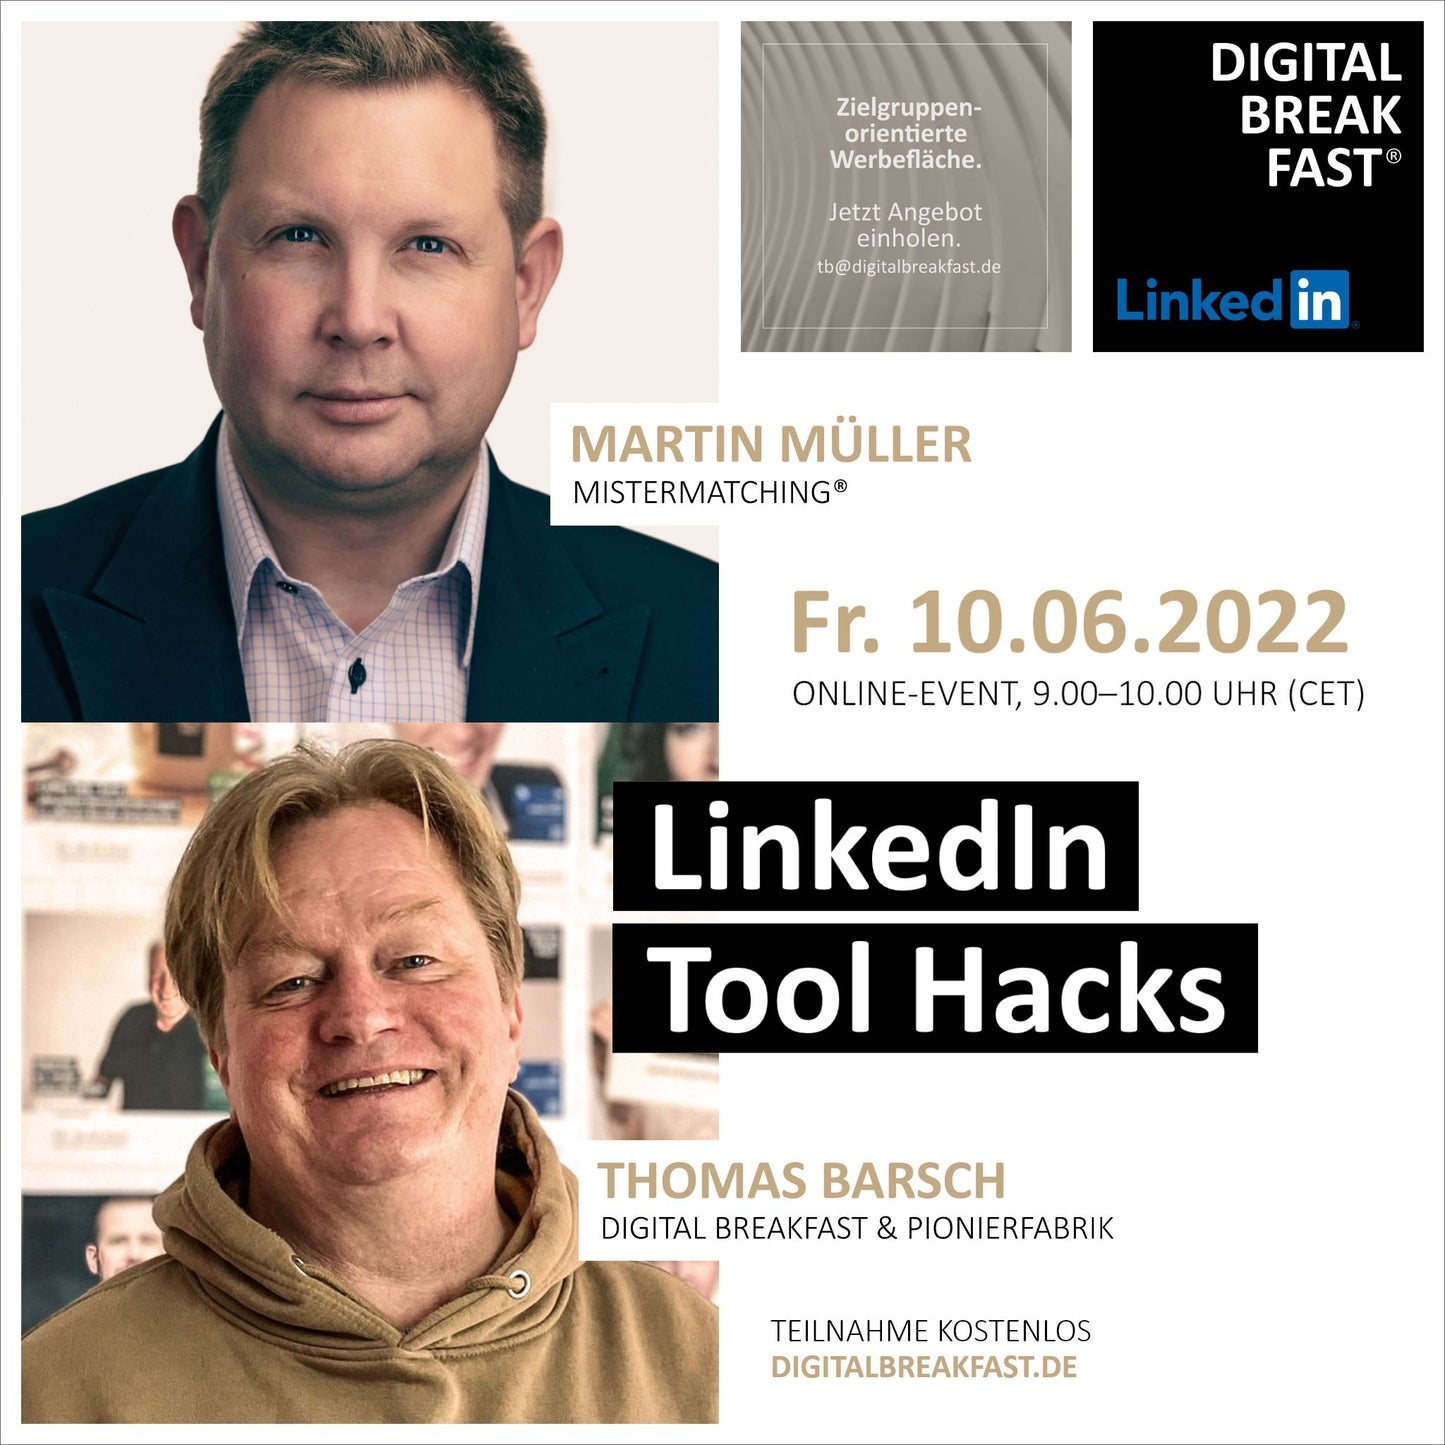 10.06.2022 | "LinkedIn Tool Hacks" mit Martin Müller | MisterMatching® & Thomas Barsch | DIGITAL BREAKFAST